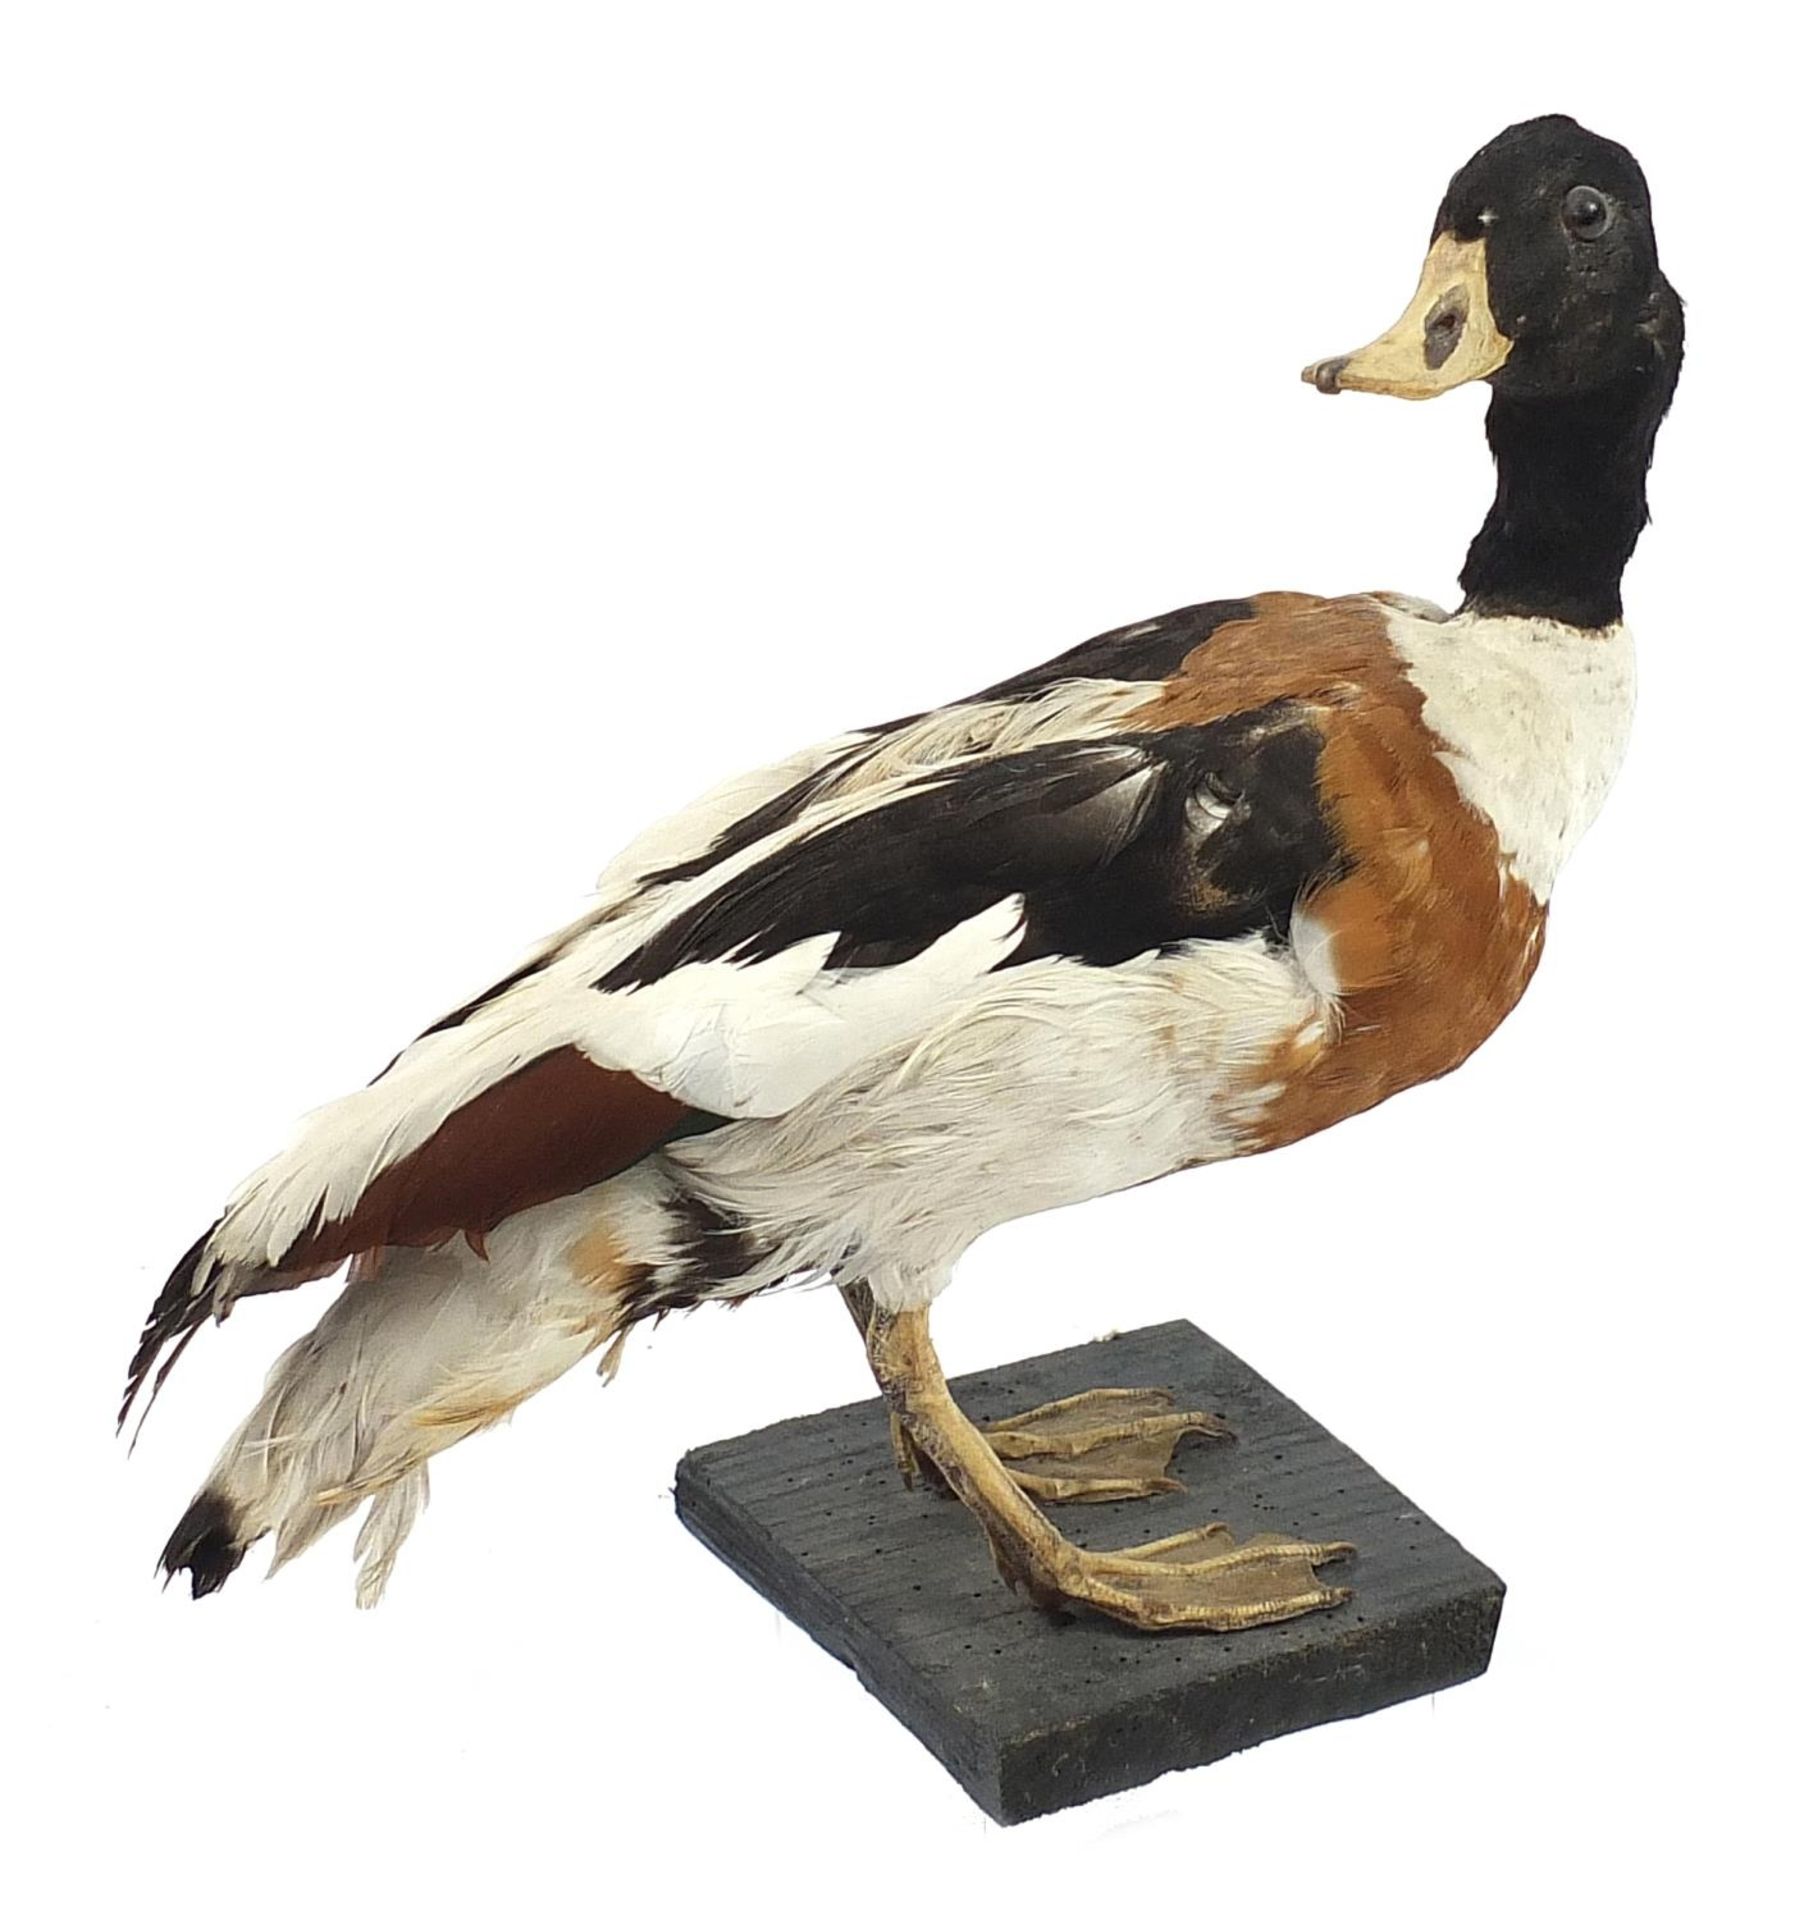 Taxidermy duck raised on a wooden plinth base, 32cm high